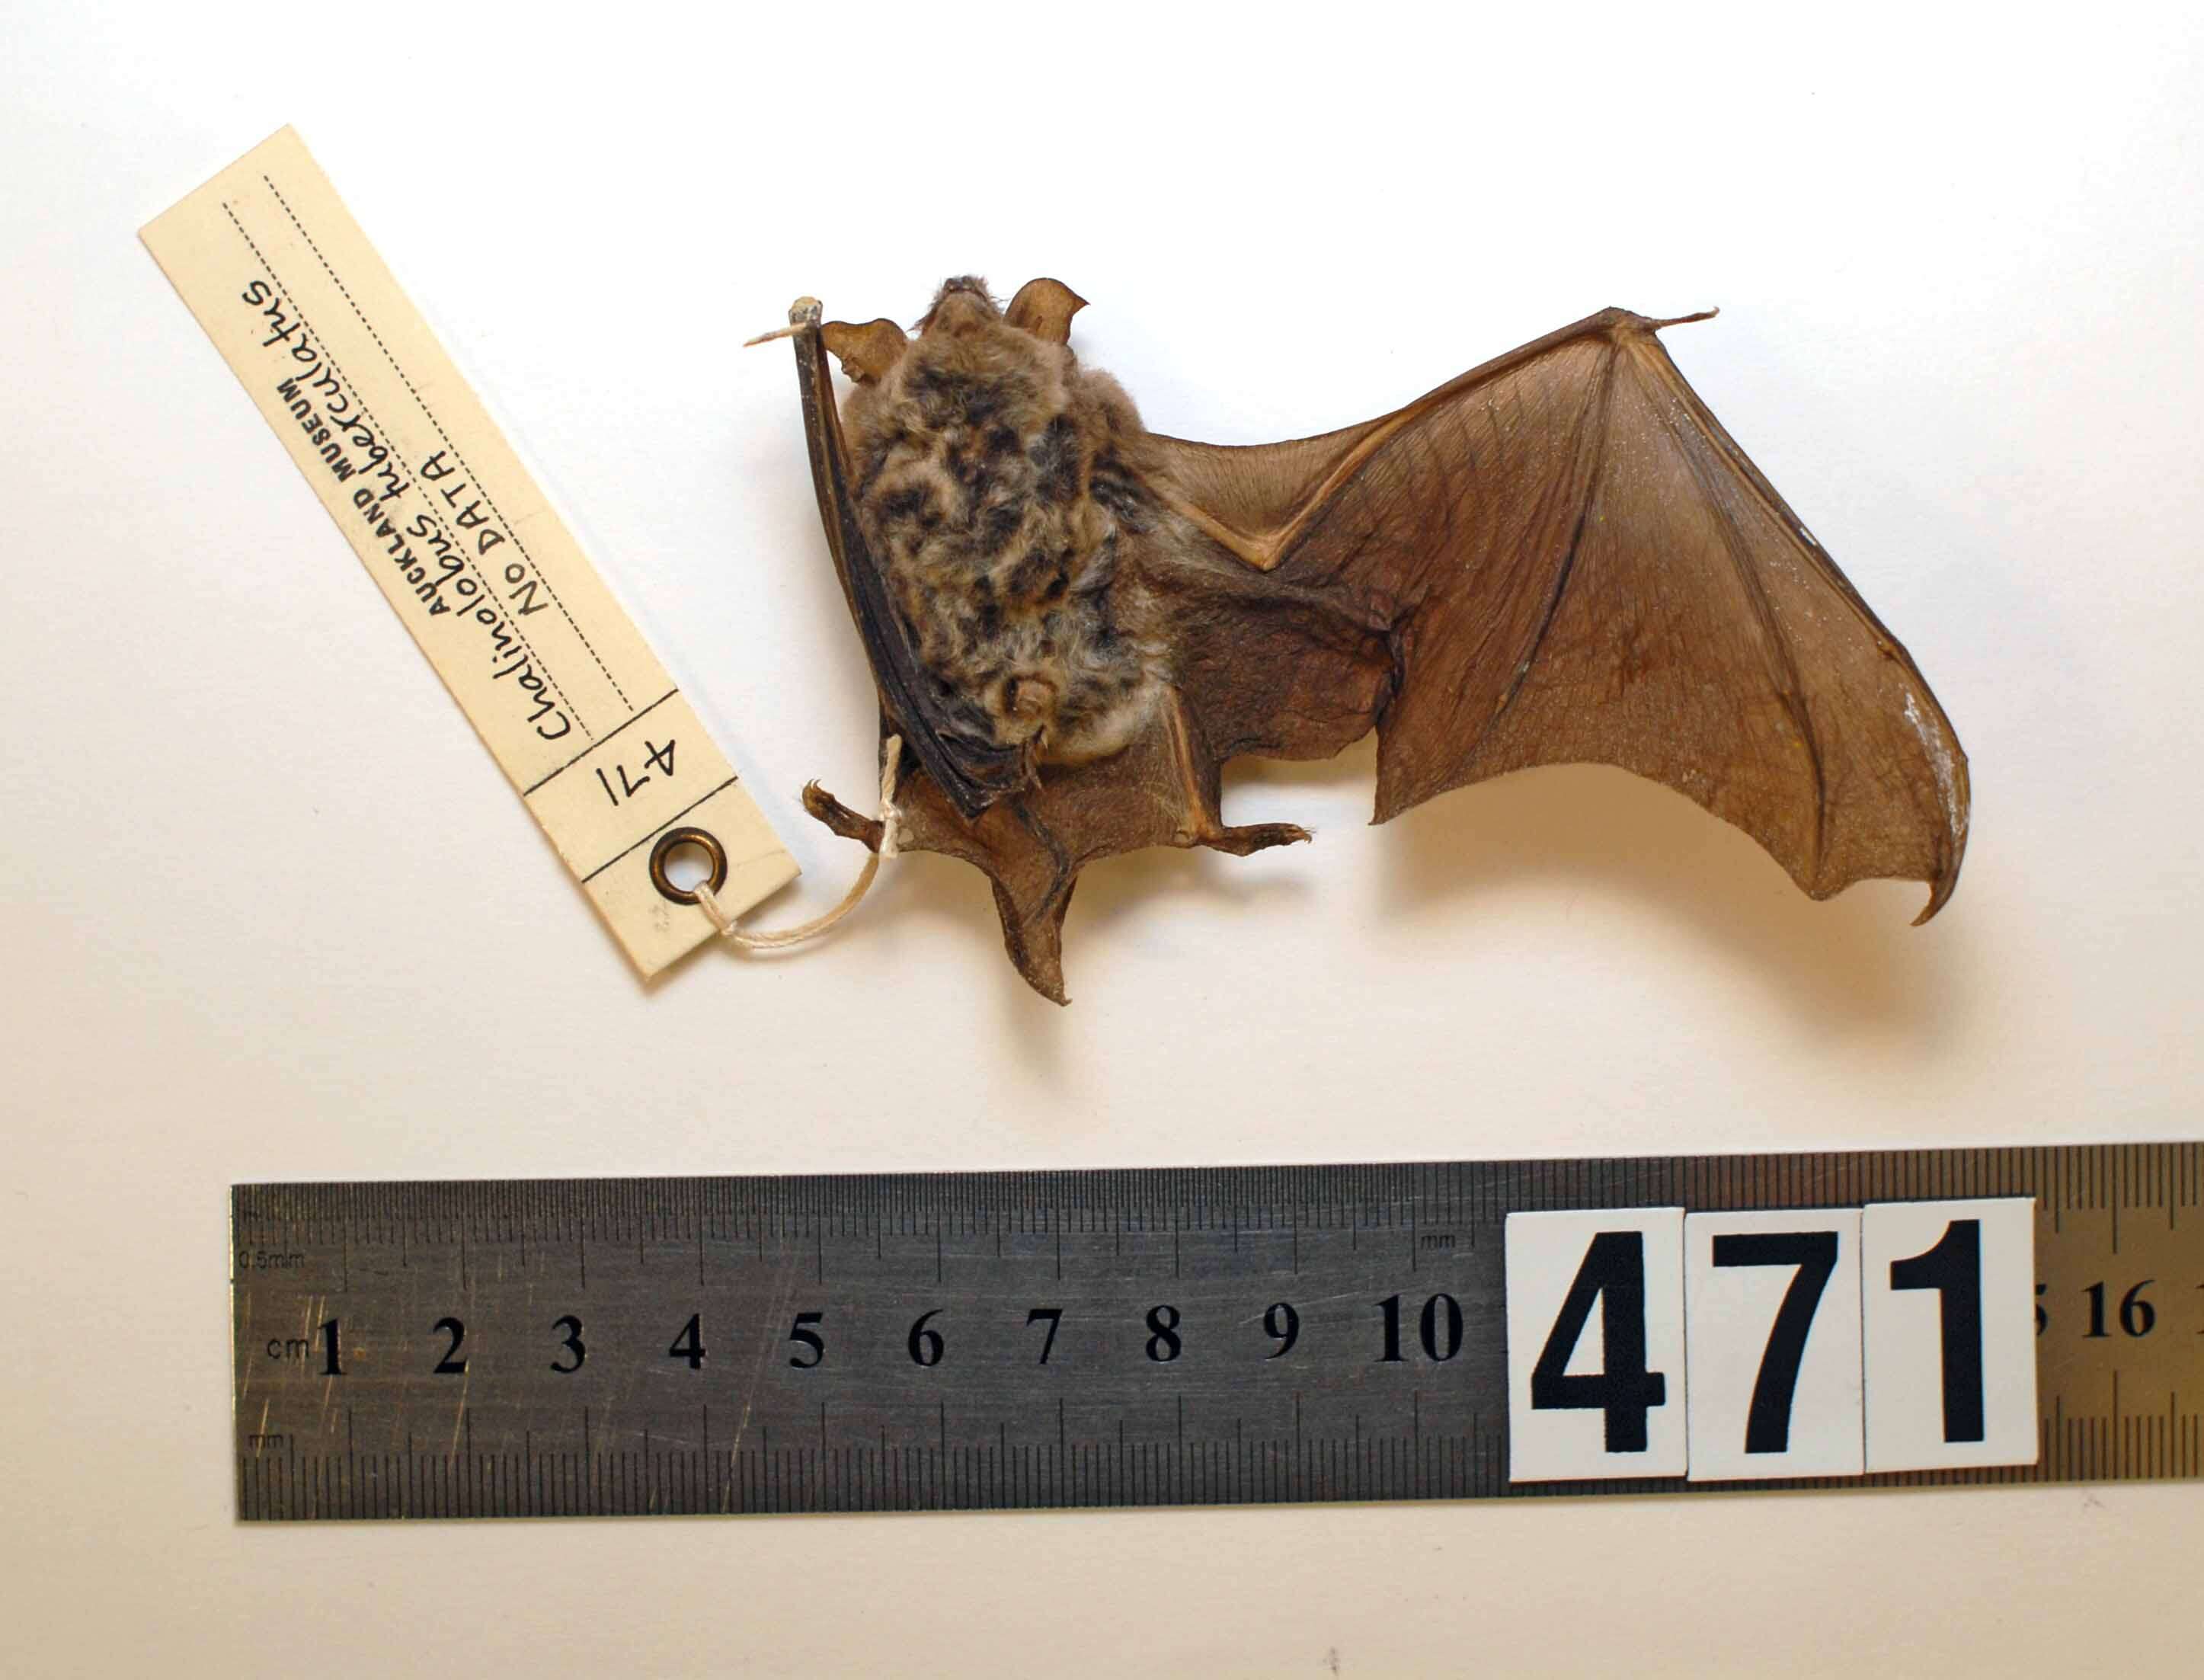 Image of Long-tailed Wattled Bat